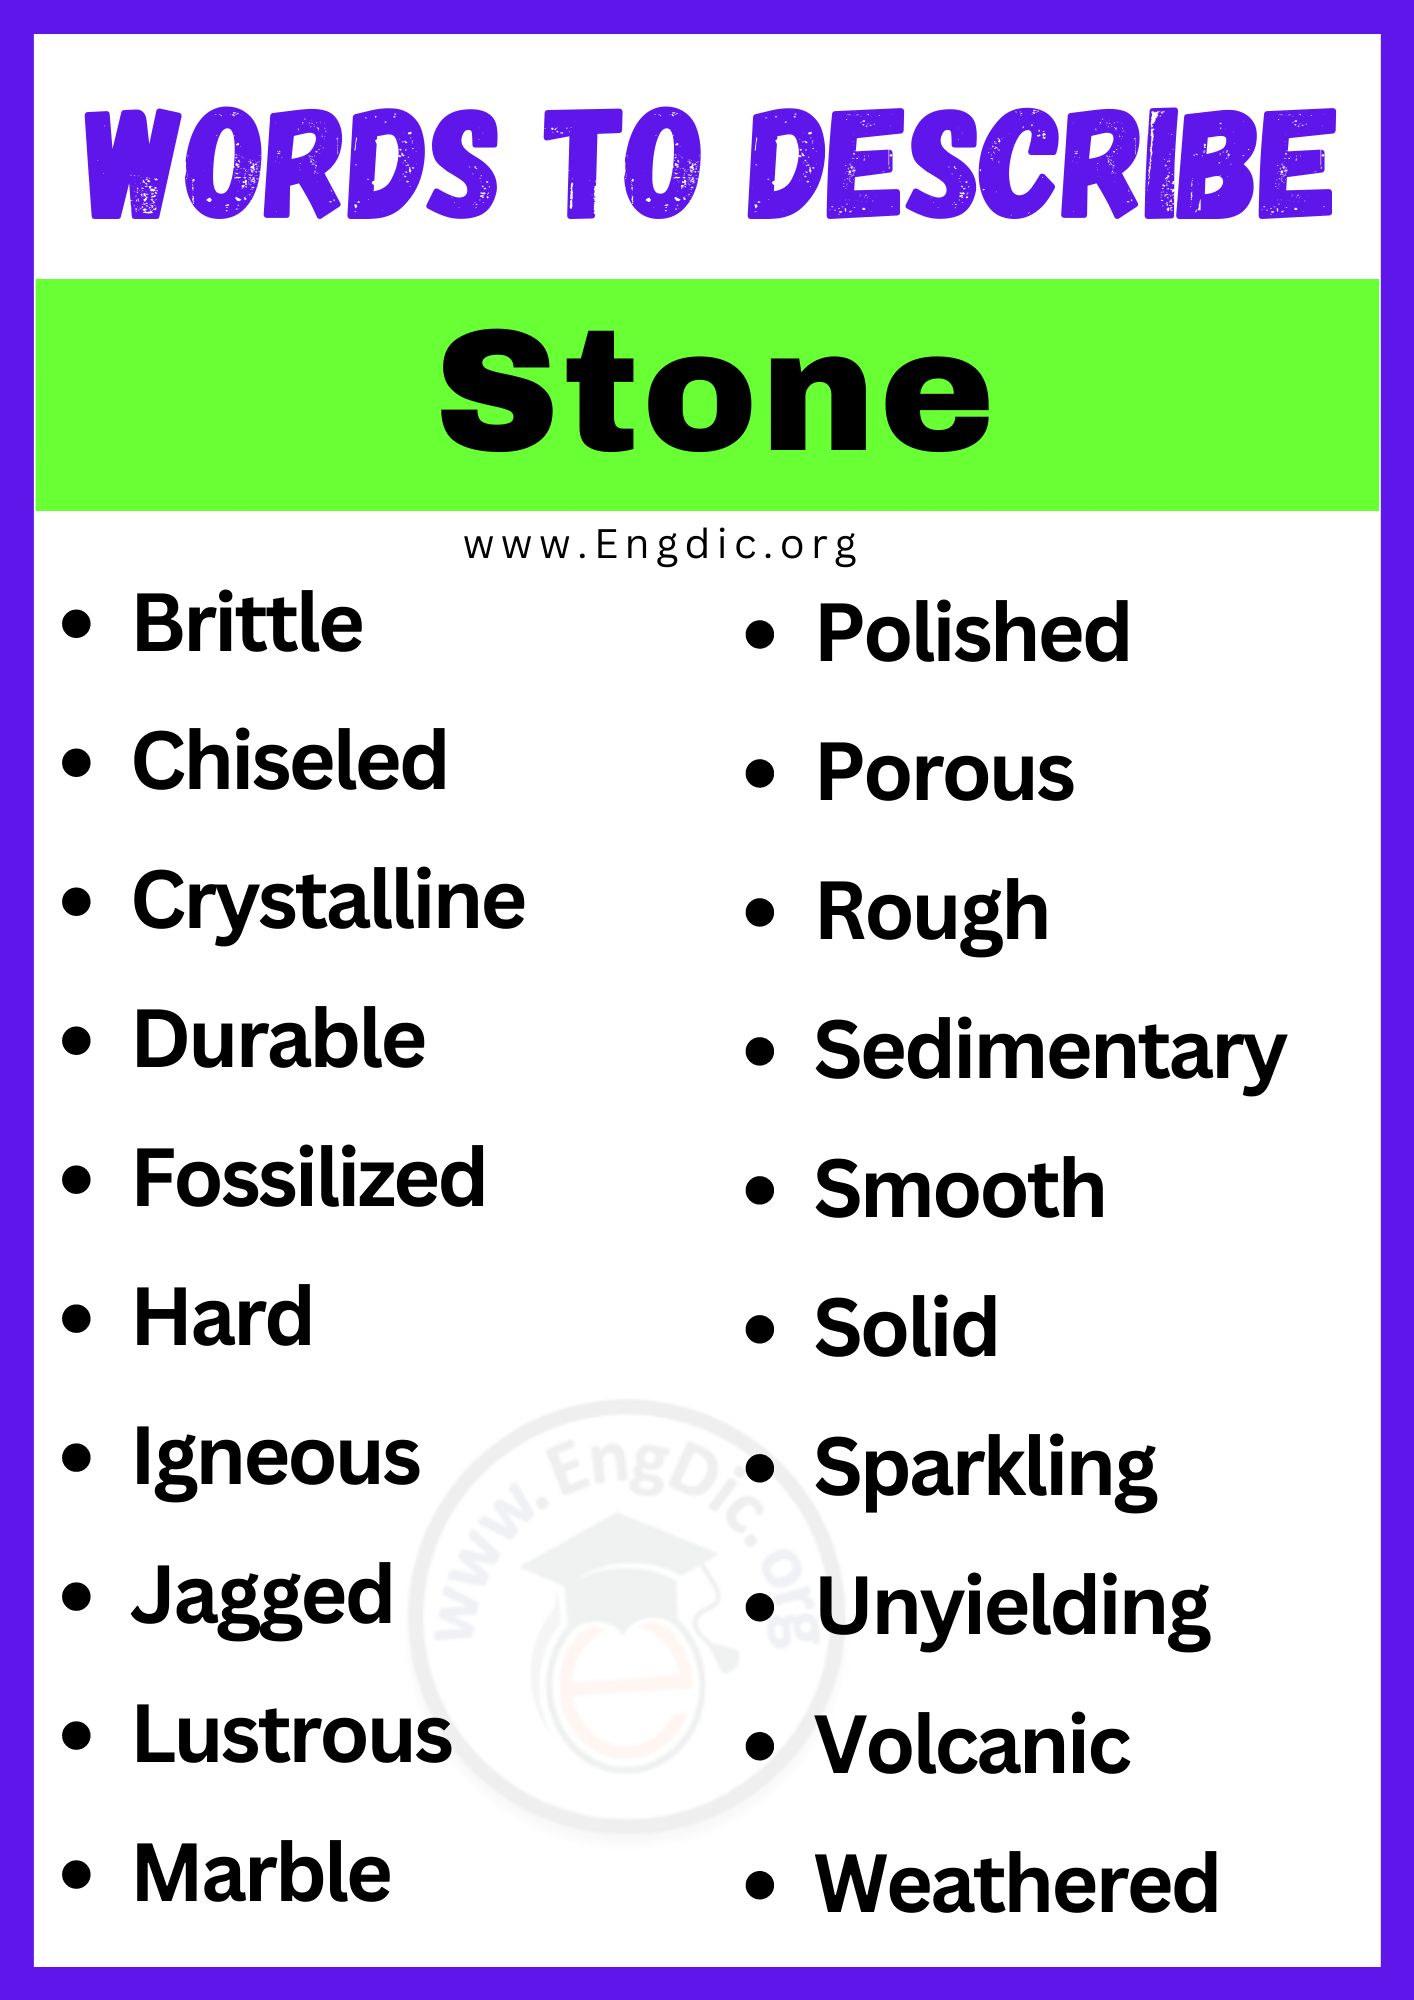 Words to Describe Stone